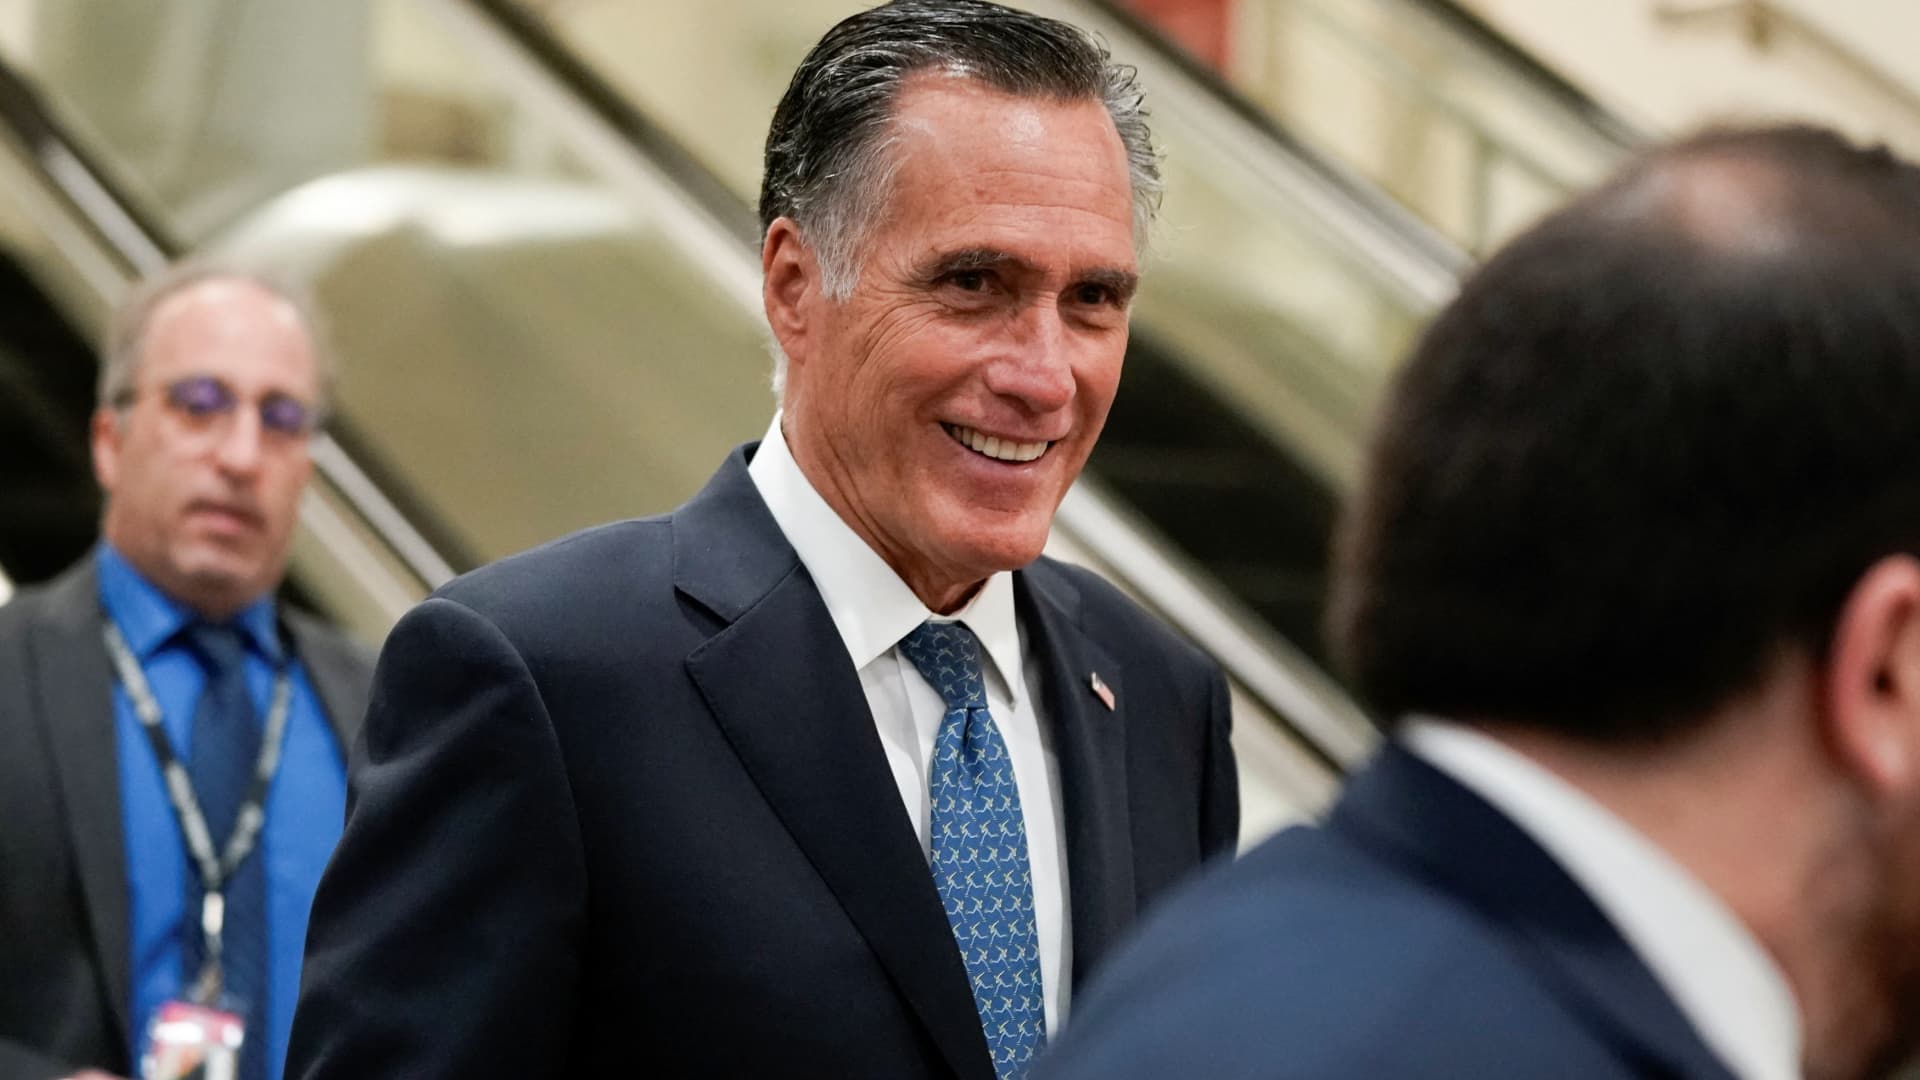 Senators reach tentative deal on $10 billion in additional Covid funding, Romney says